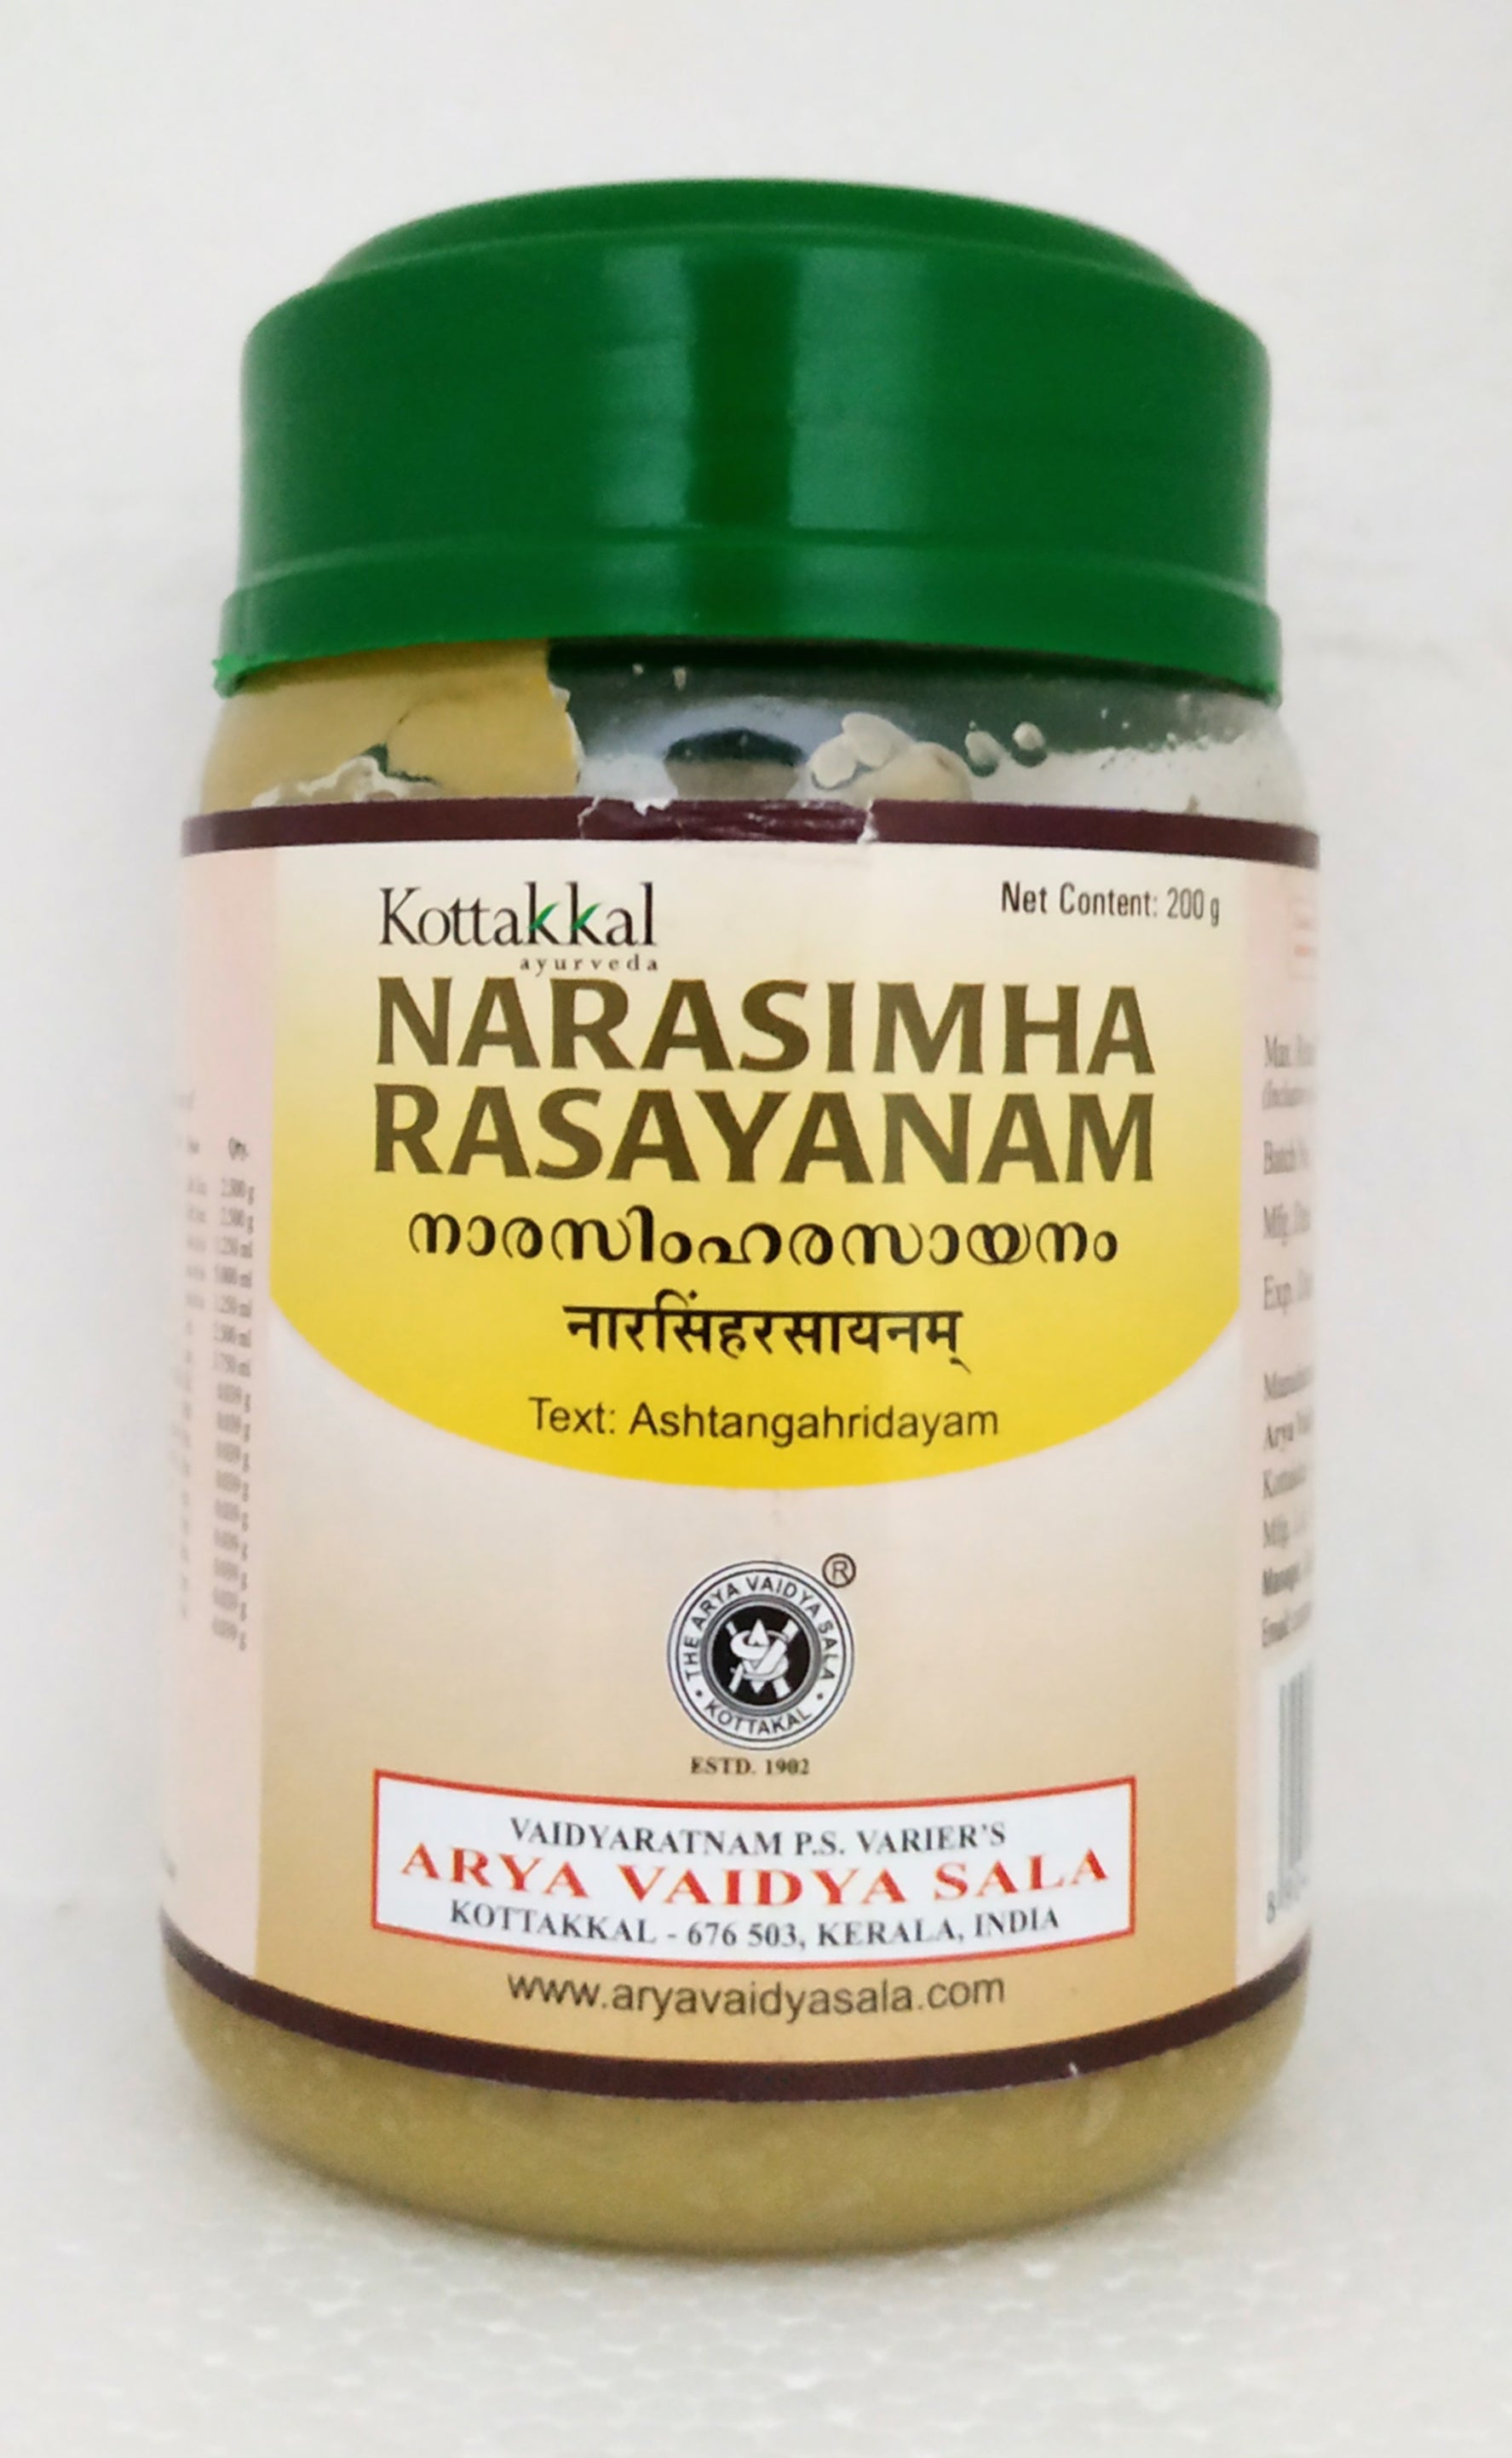 Narasimha rasayanam 200gm -  Kottakkal - Medizzo.com